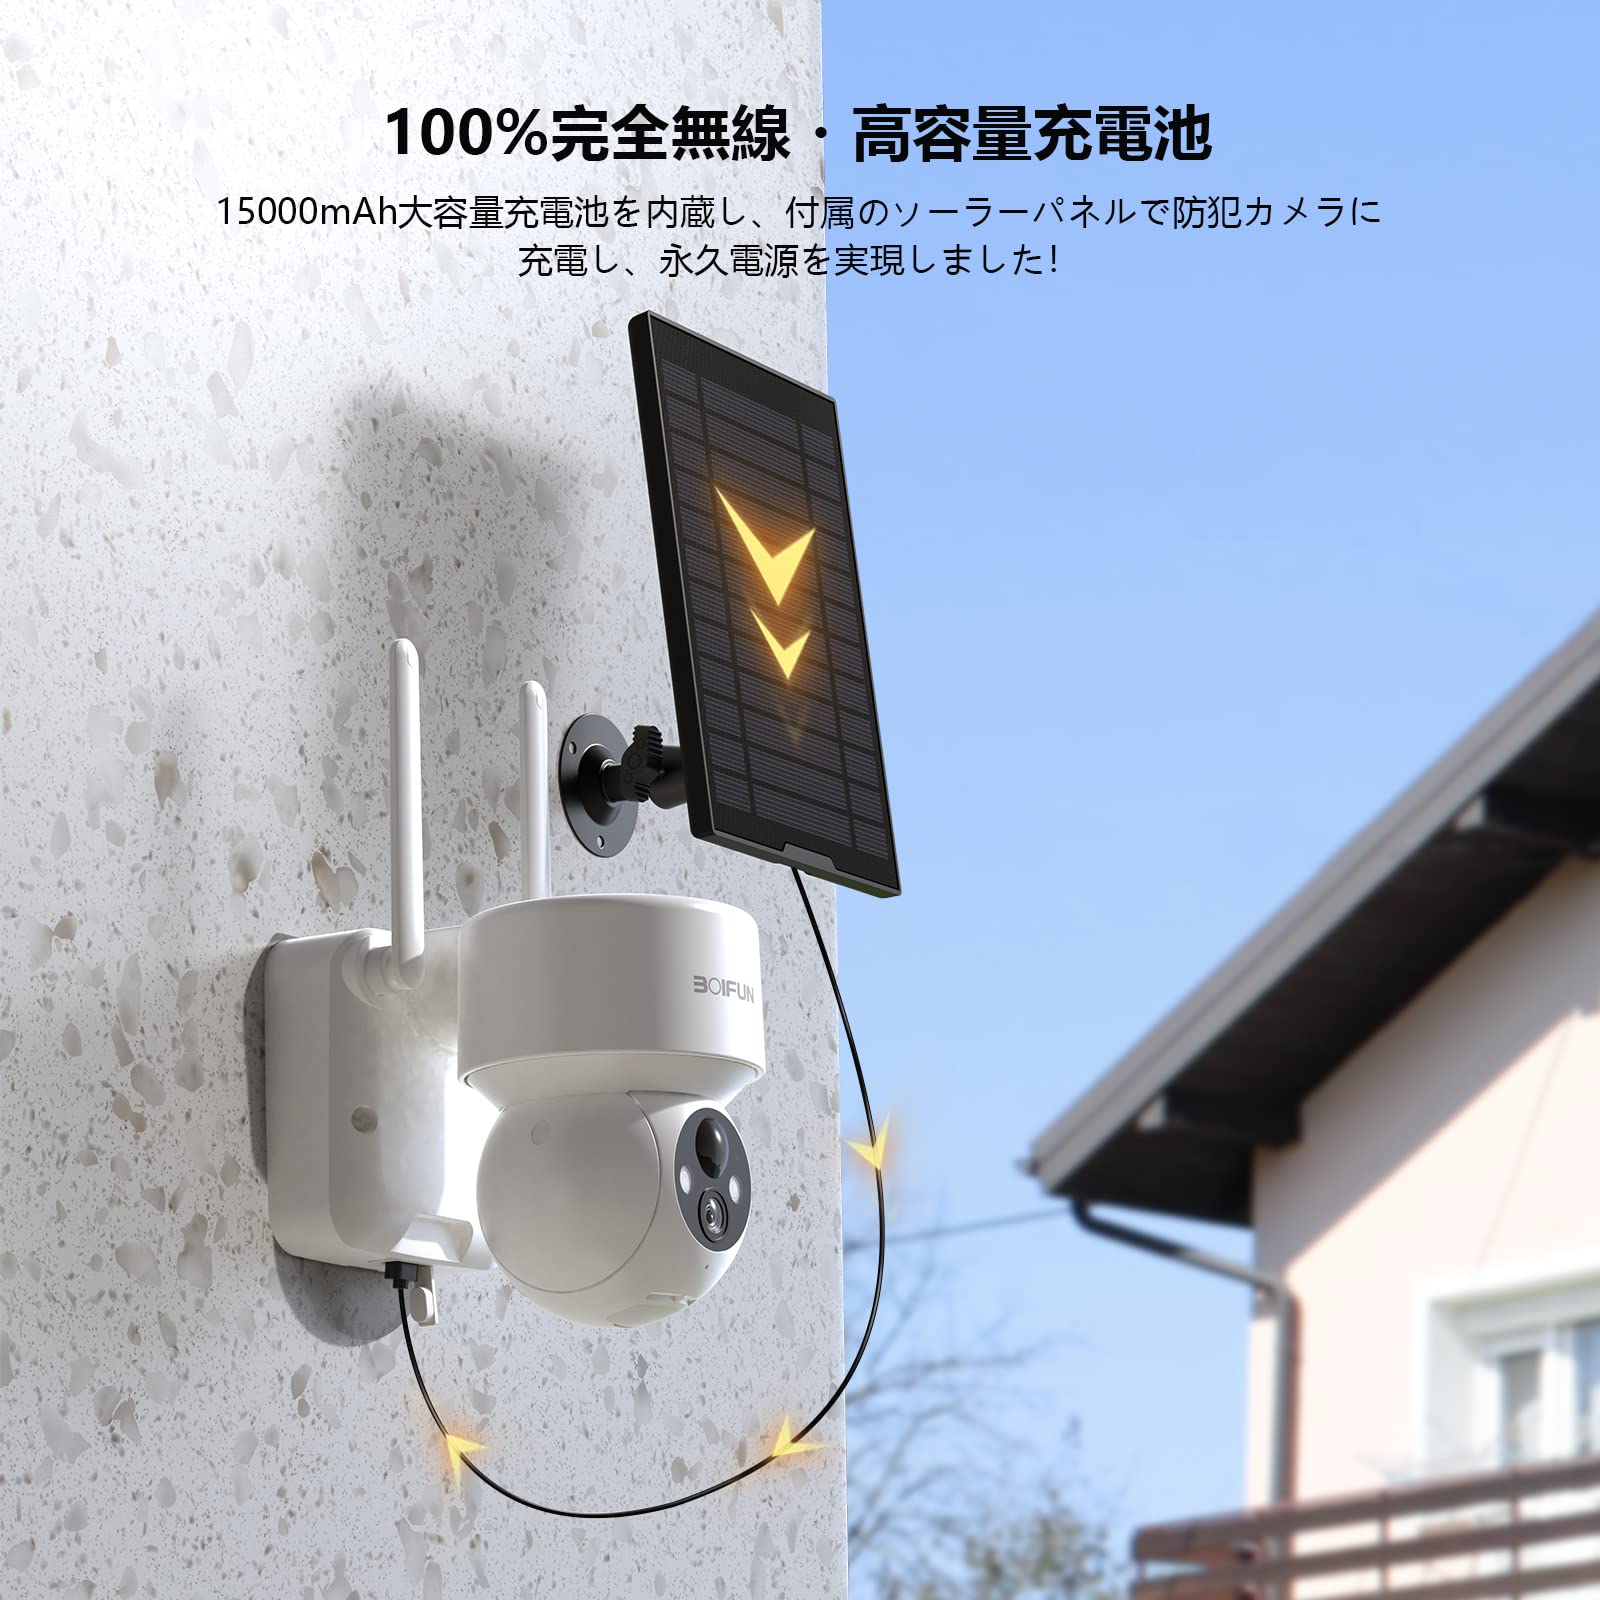 Mua Boifun Security Camera, Outdoor, Solar Wireless/WIFI, Night